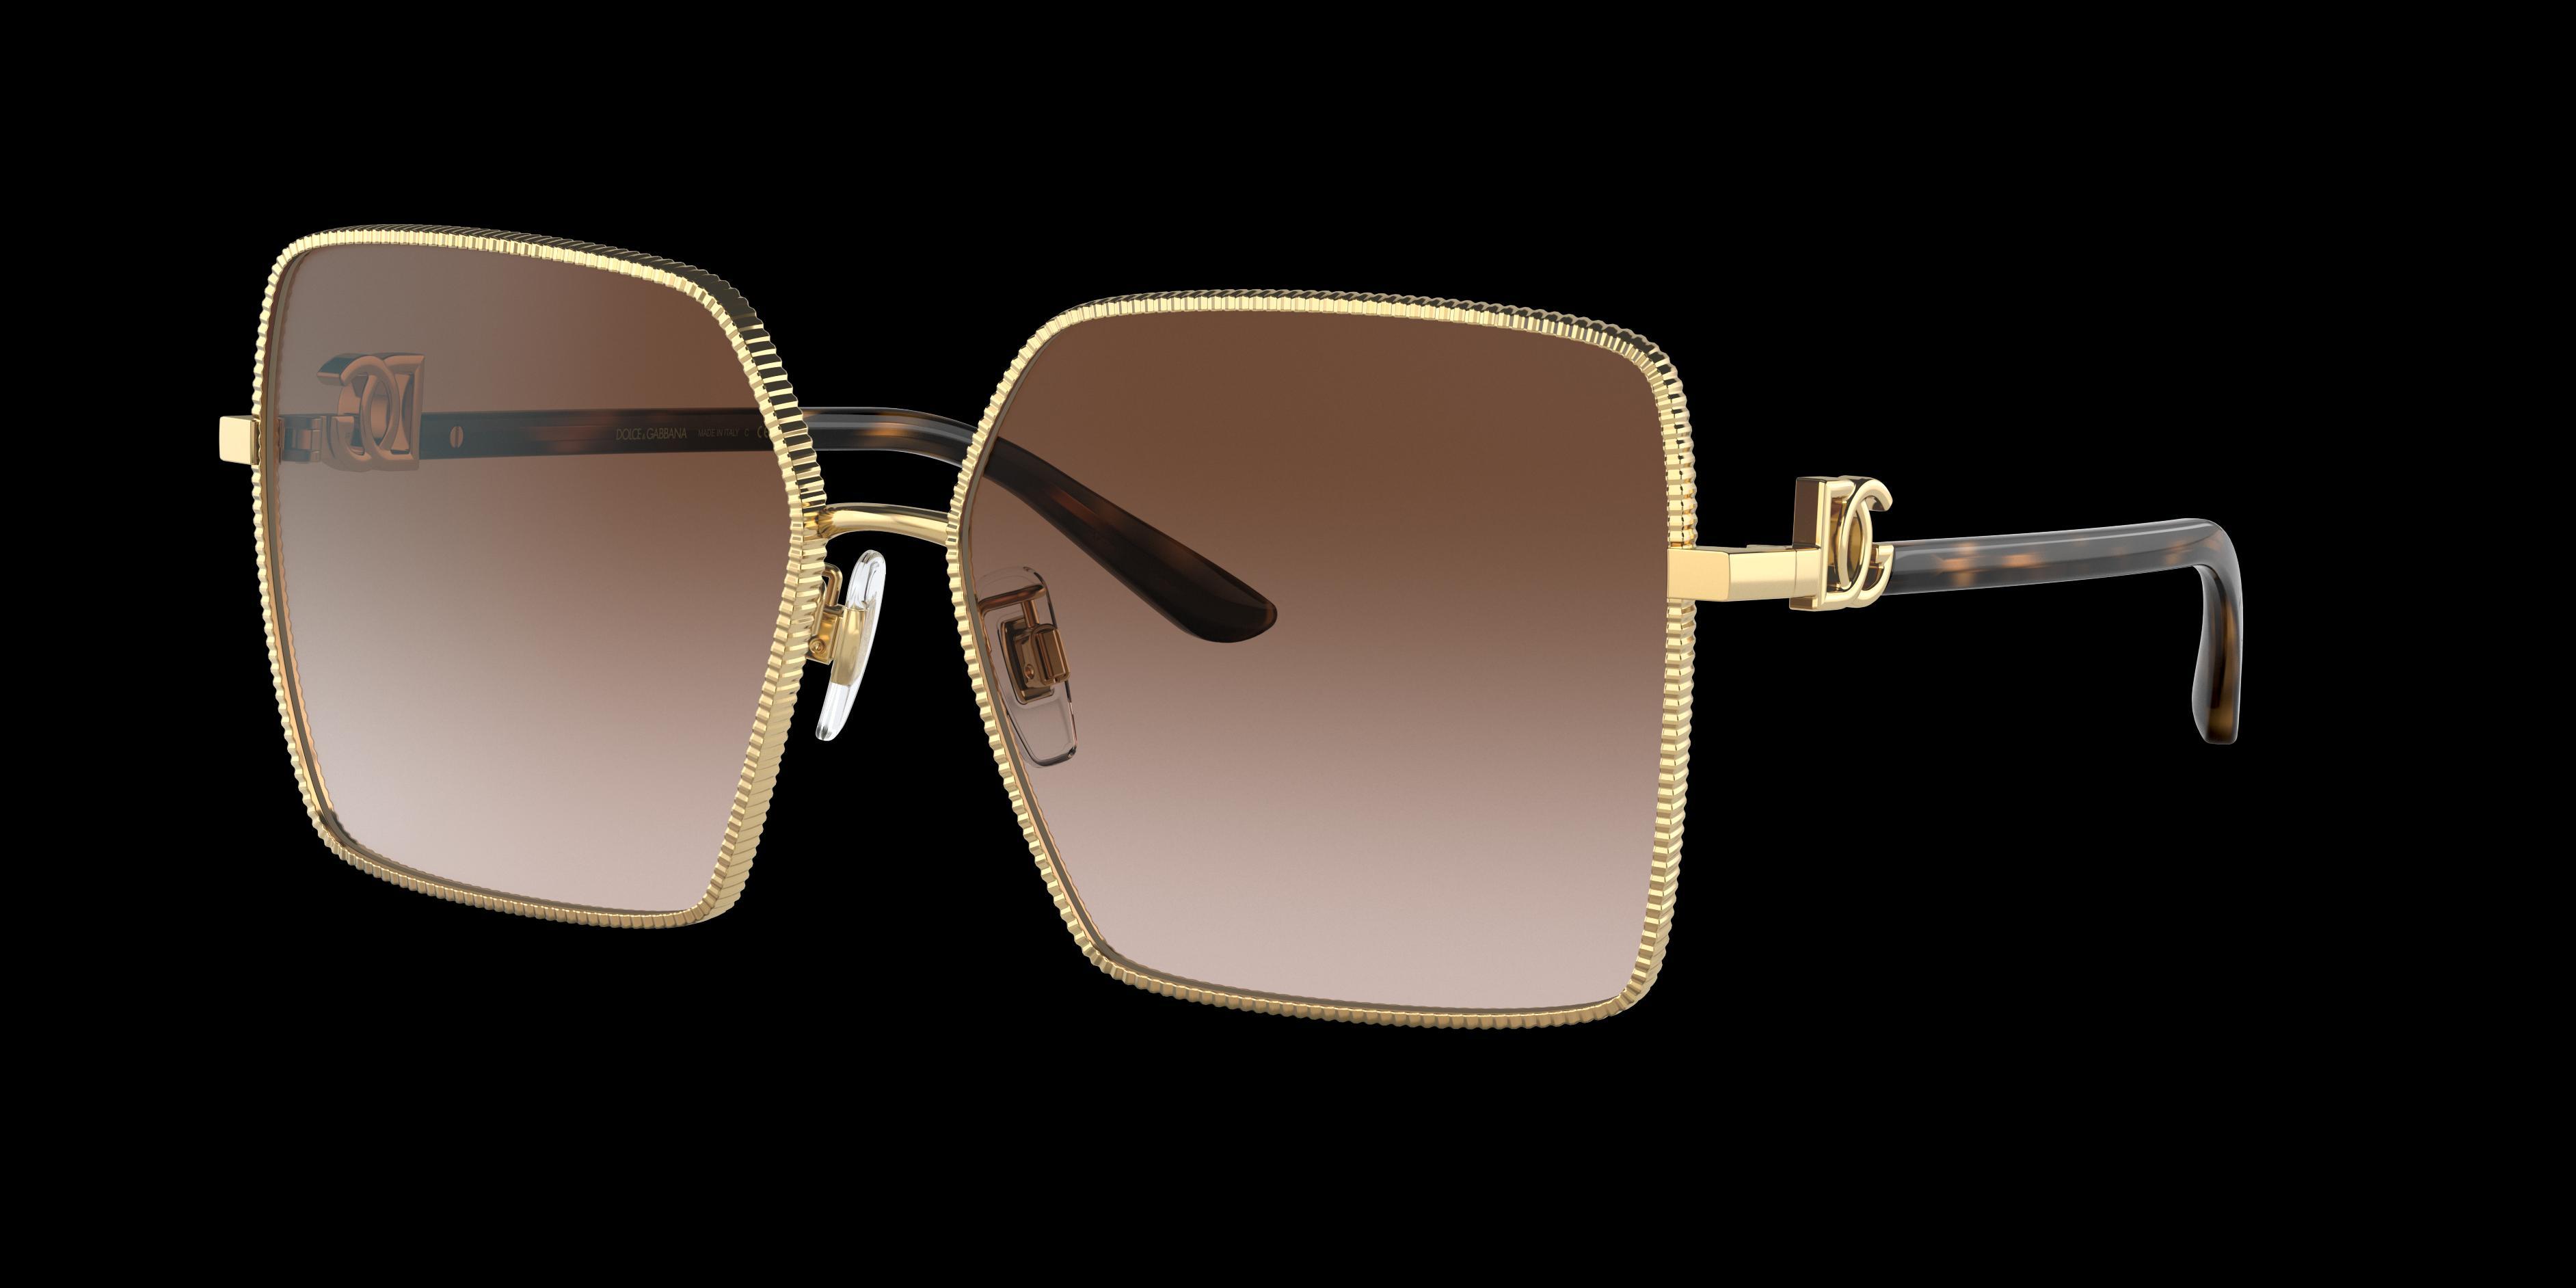 Dolce & Gabbana 60mm Square Sunglasses Product Image